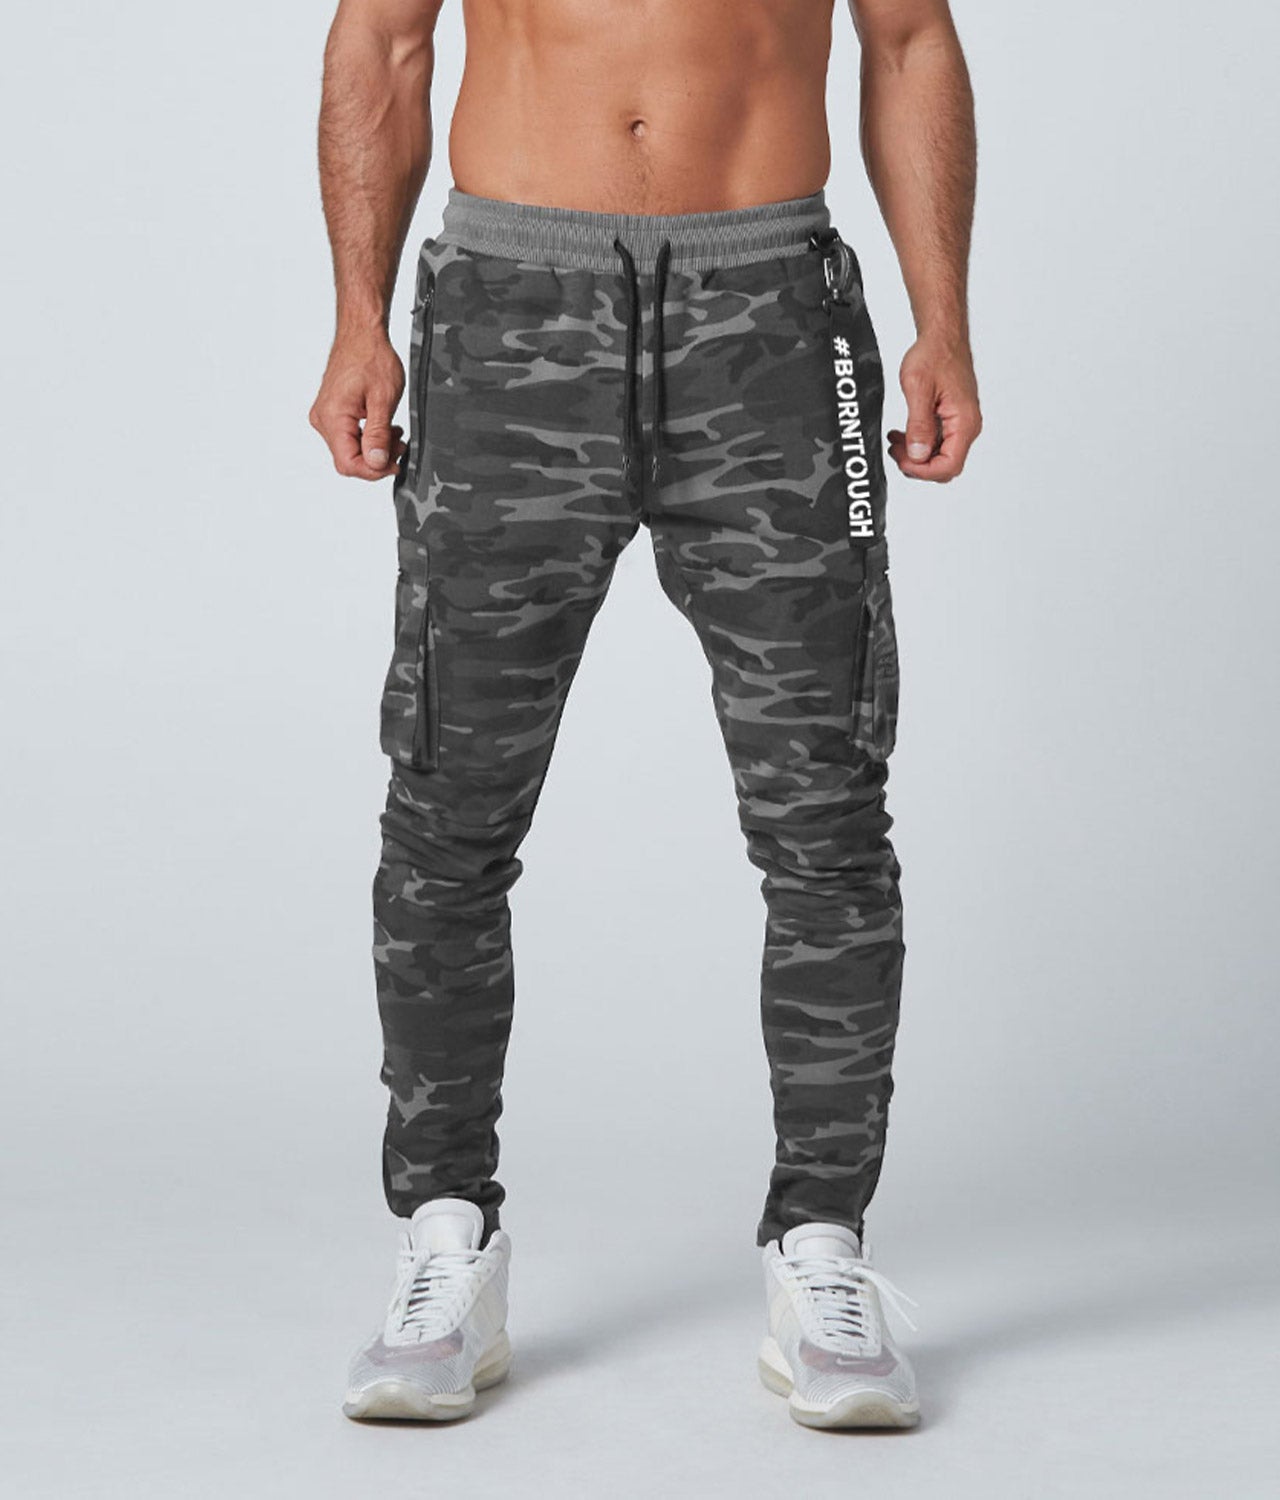 Born Tough Slim Fit Gym Workout Cargo Jogger Pants For Men Grey Camo -  Elite Sports